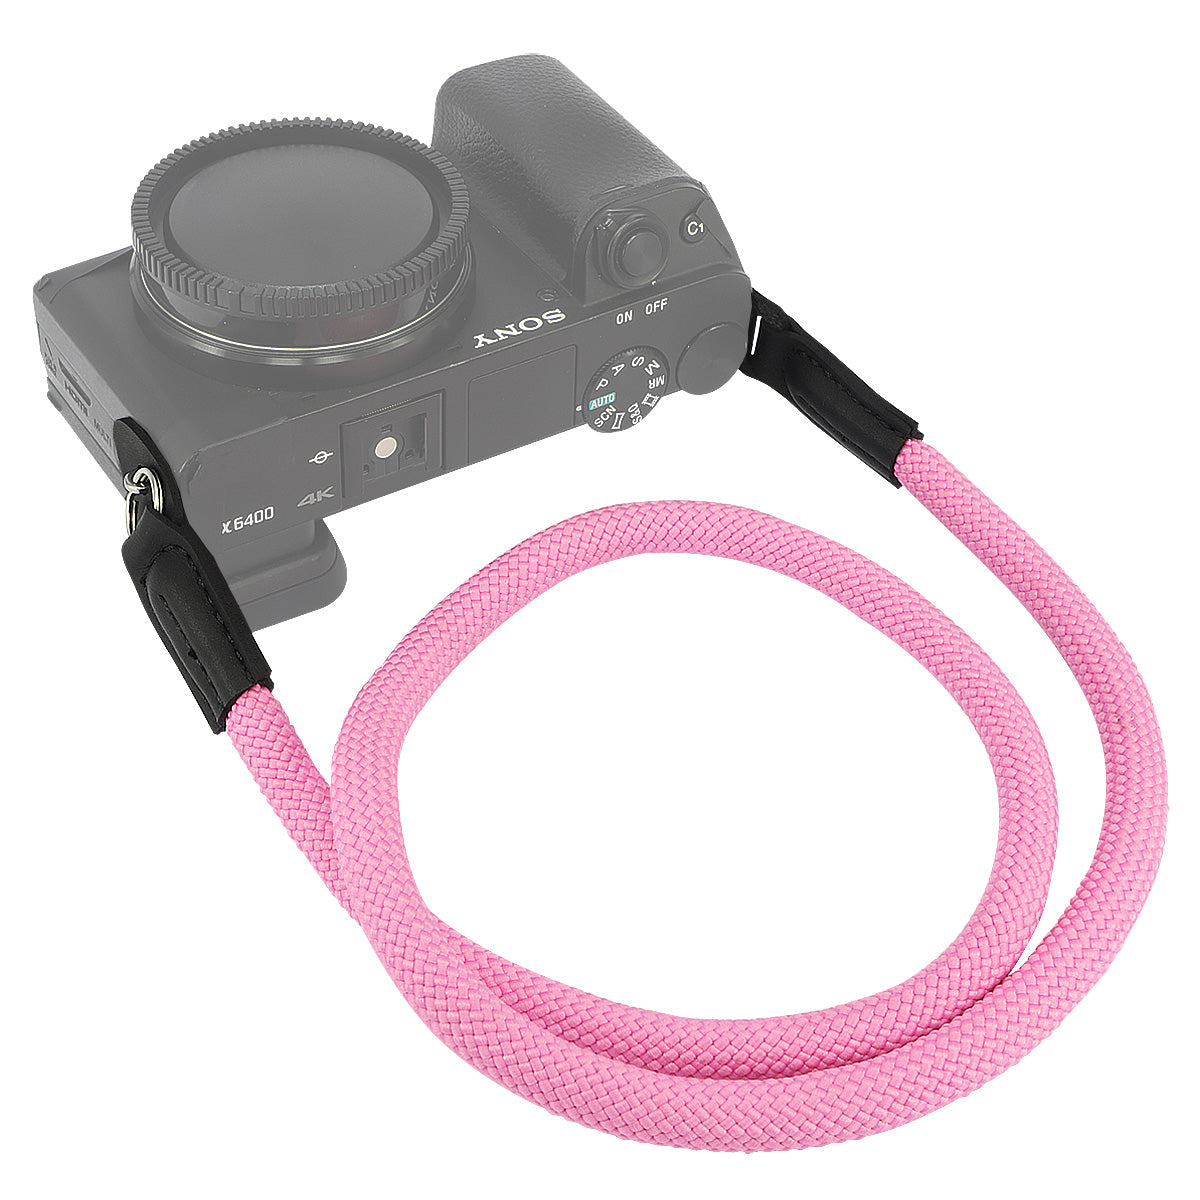 Haoge Camera Neck Strap for Sony a5000 a5100 a6000 a6100 a6300 a6400 a6500 a6600 NEX-3N NEX-5T NEX-5R NEX-6 NEX-7 NEX3 NEX5 NEX6 NEX7 Climbing Rope Pink